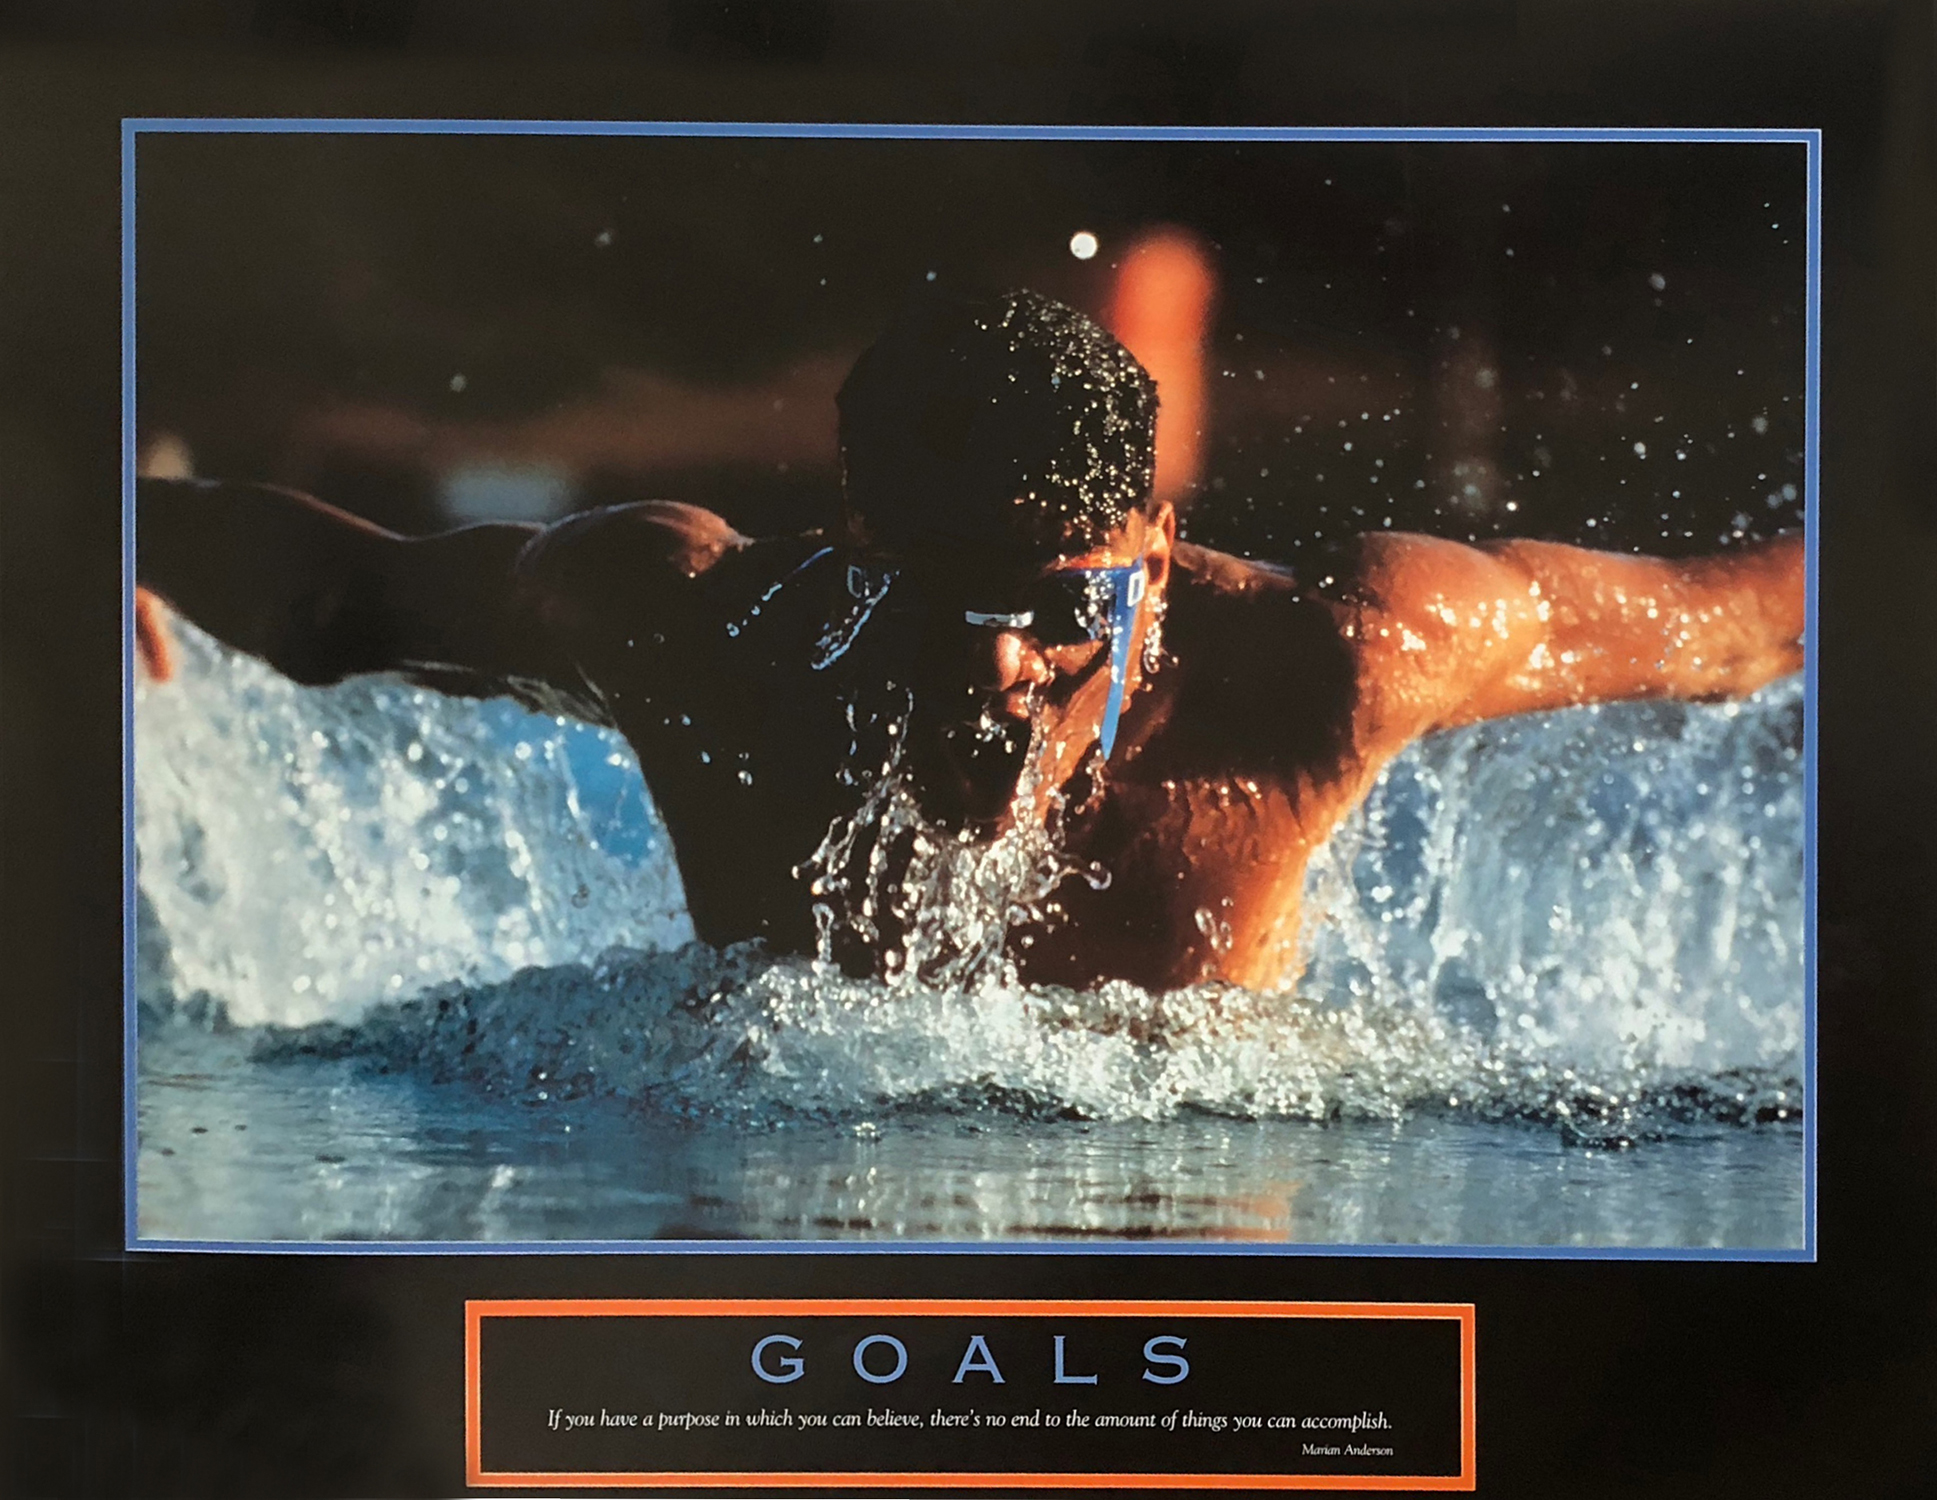 Goals - Swimmer